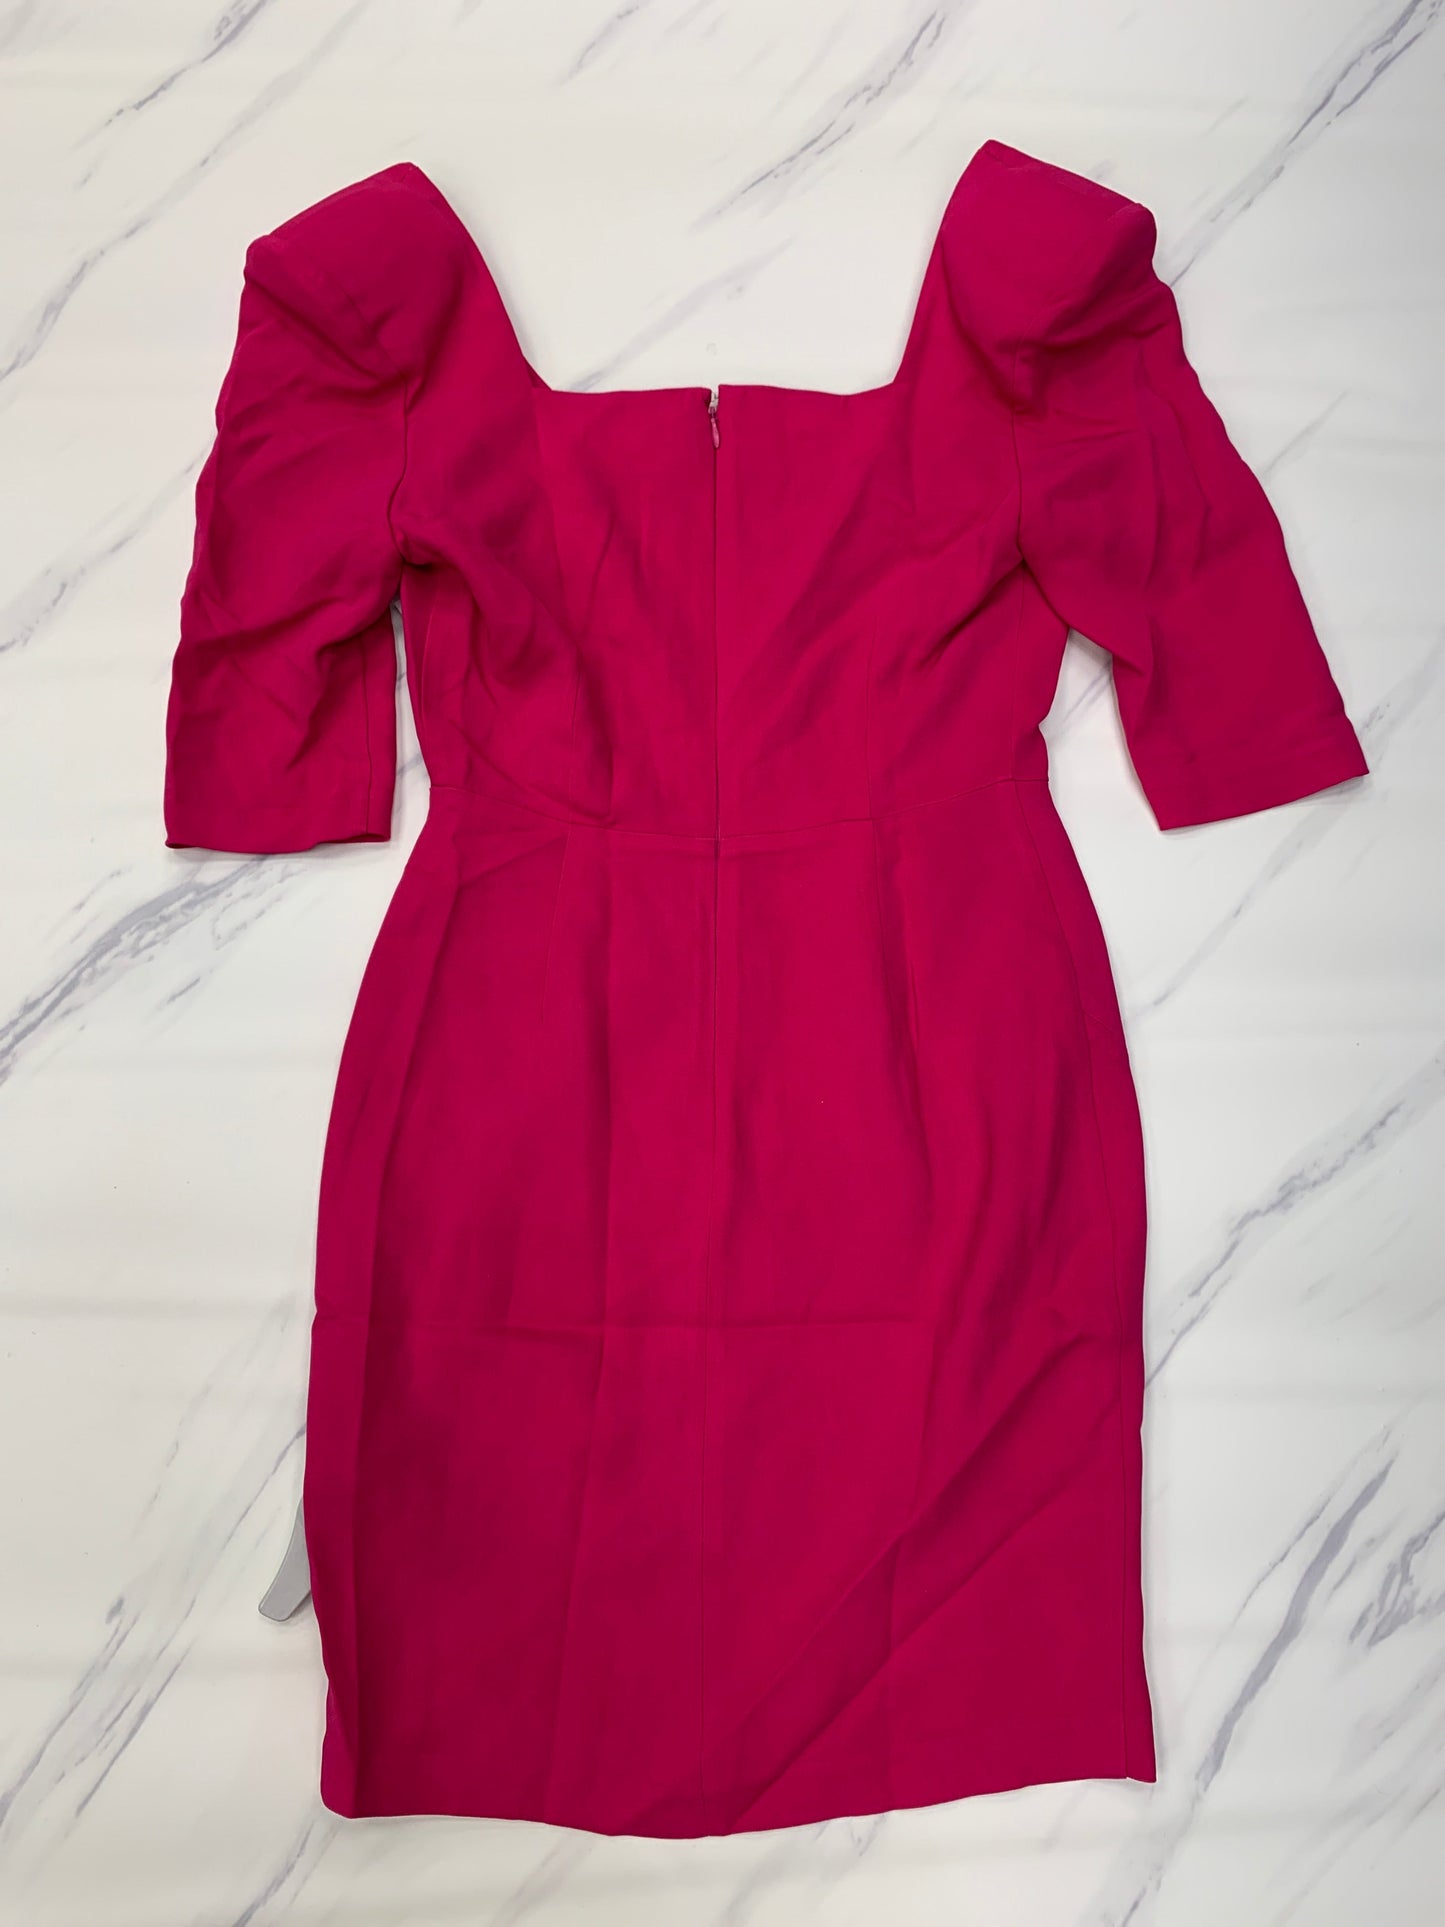 Pink Dress Designer Cma, Size Xs